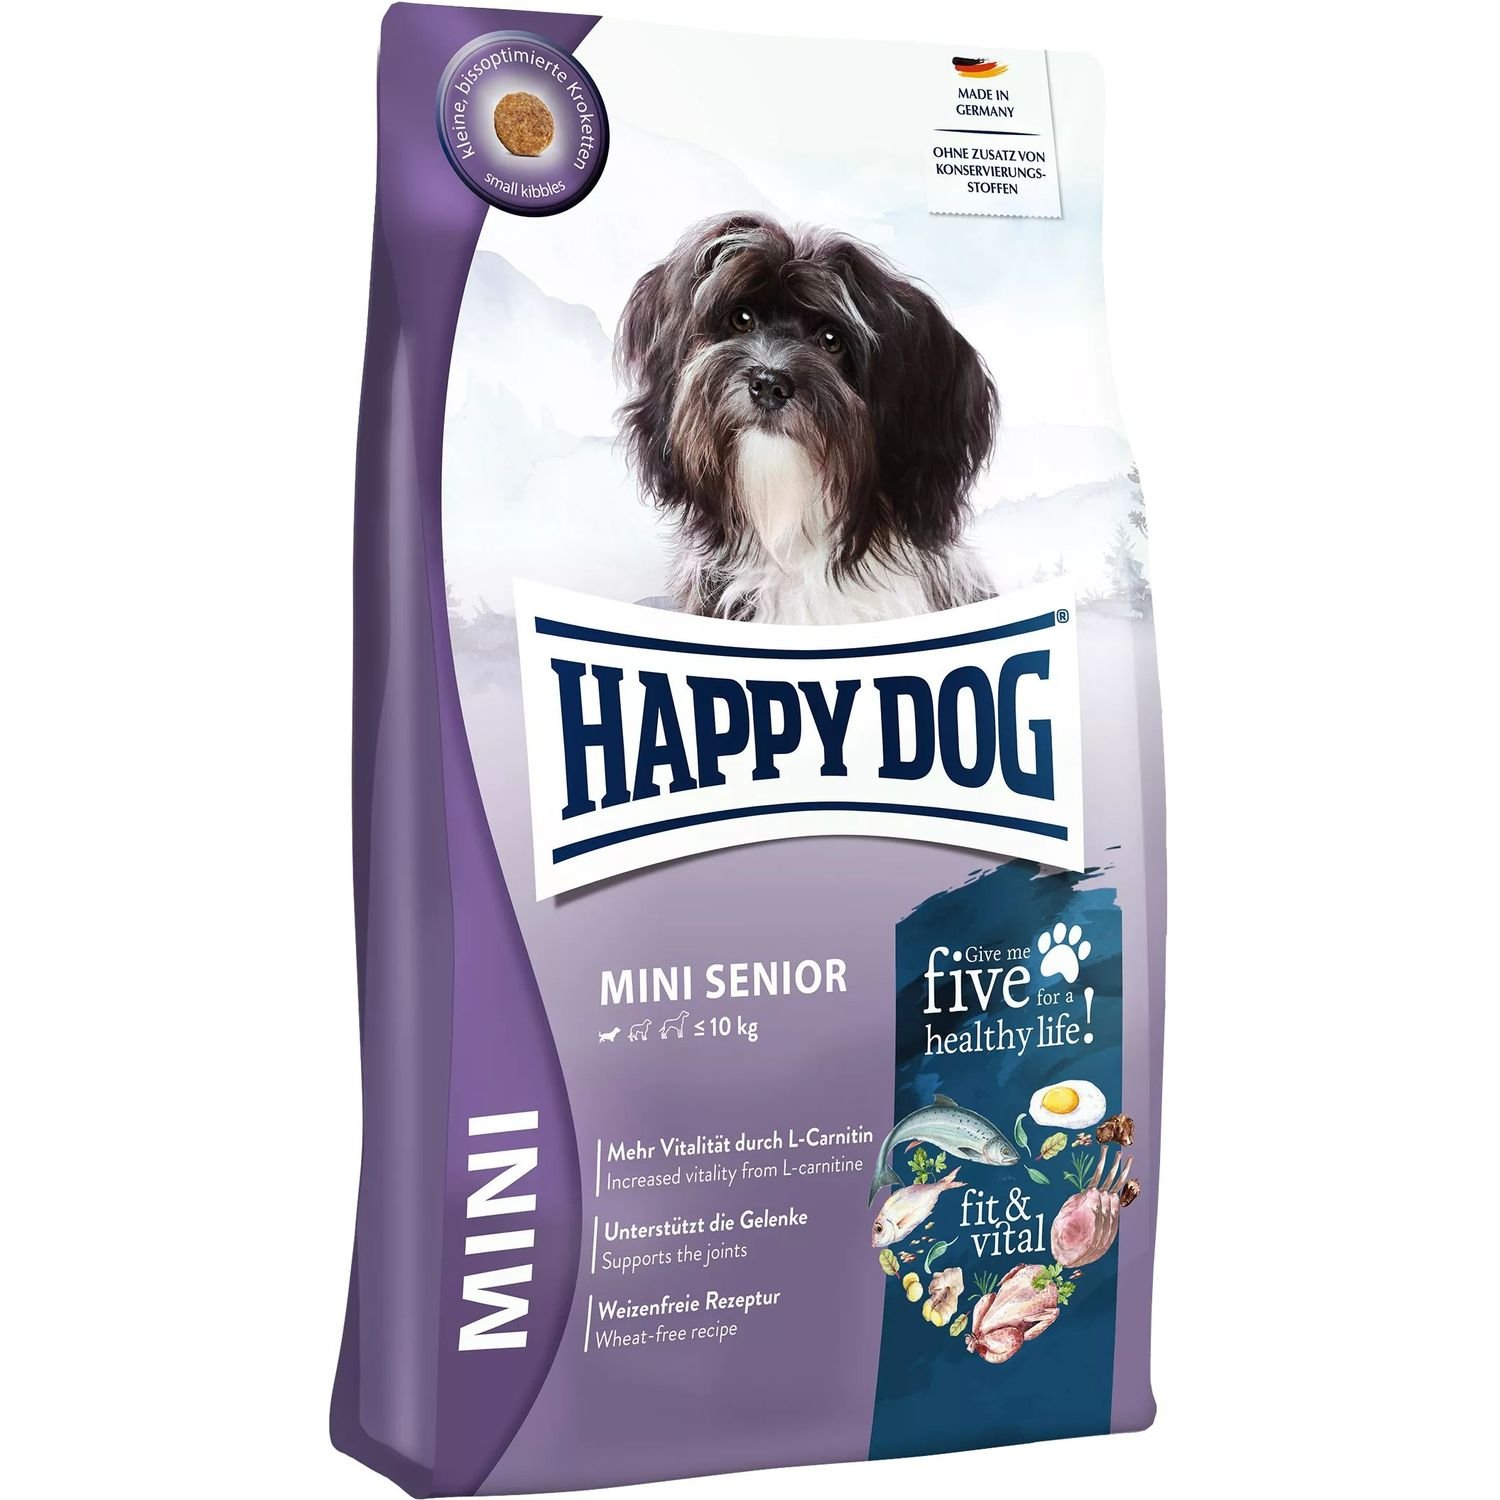 Сухой корм для пожилых собак Happy Dog HD fit & vital Mini Senior, 4 кг - фото 1